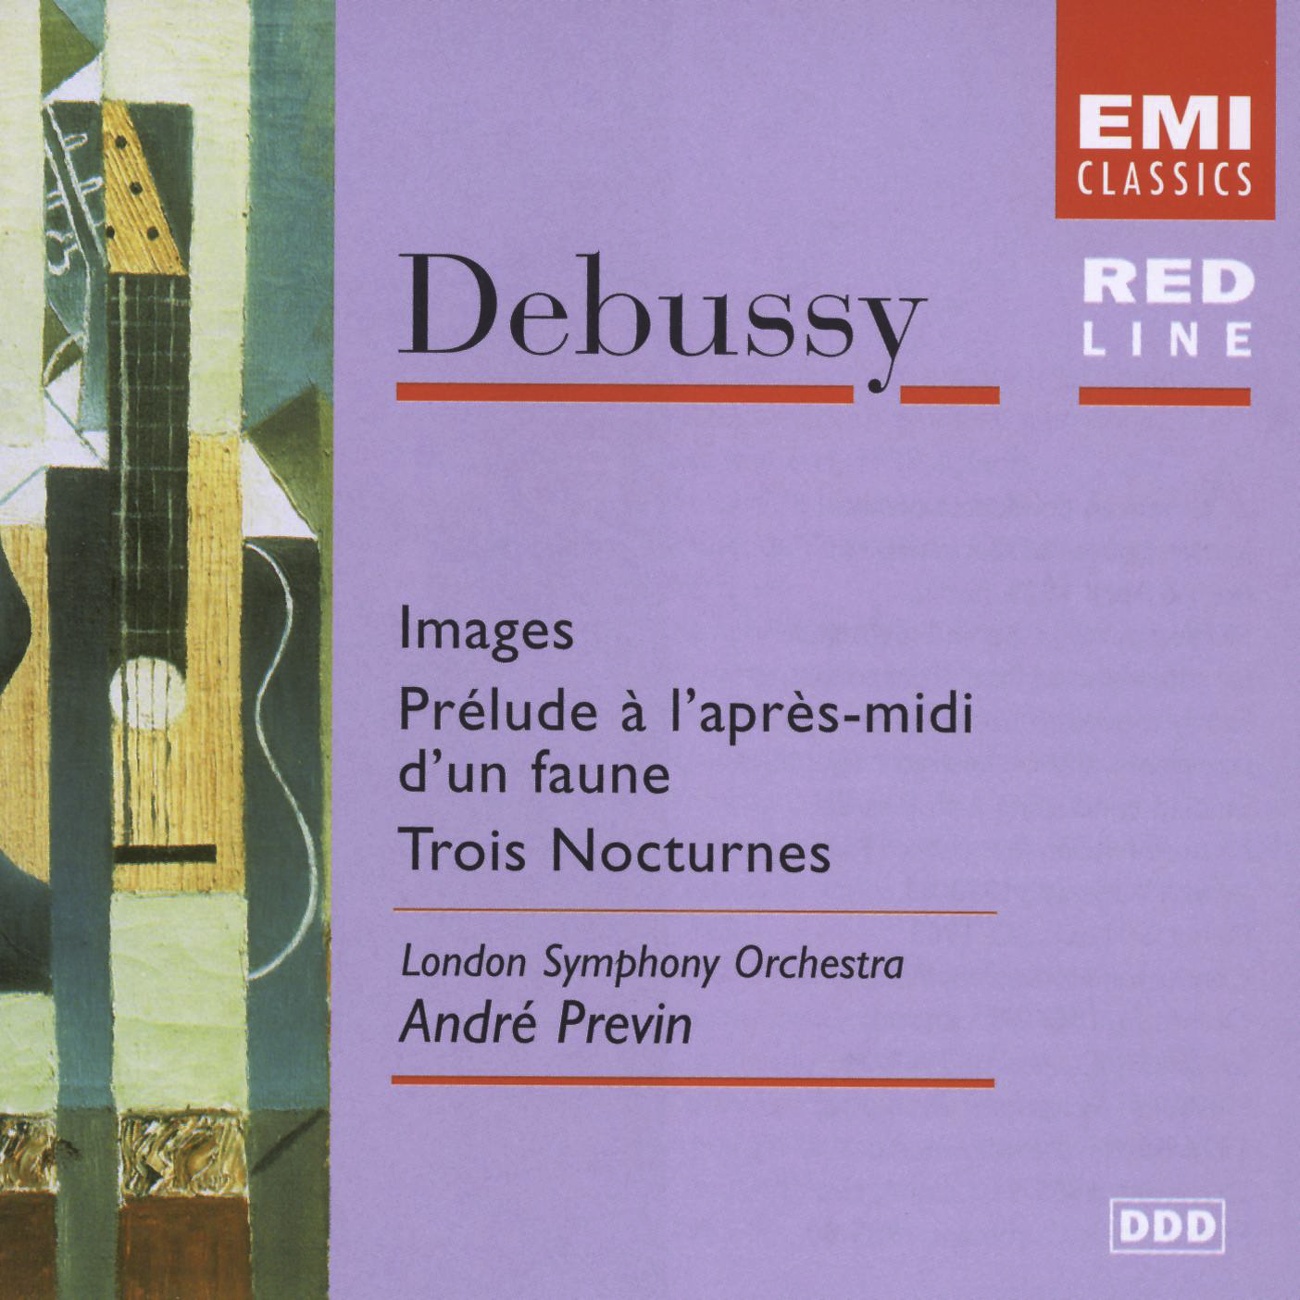 Debussy: Images  Pre lude a l' apresmidi d' un faune  Nocturnes